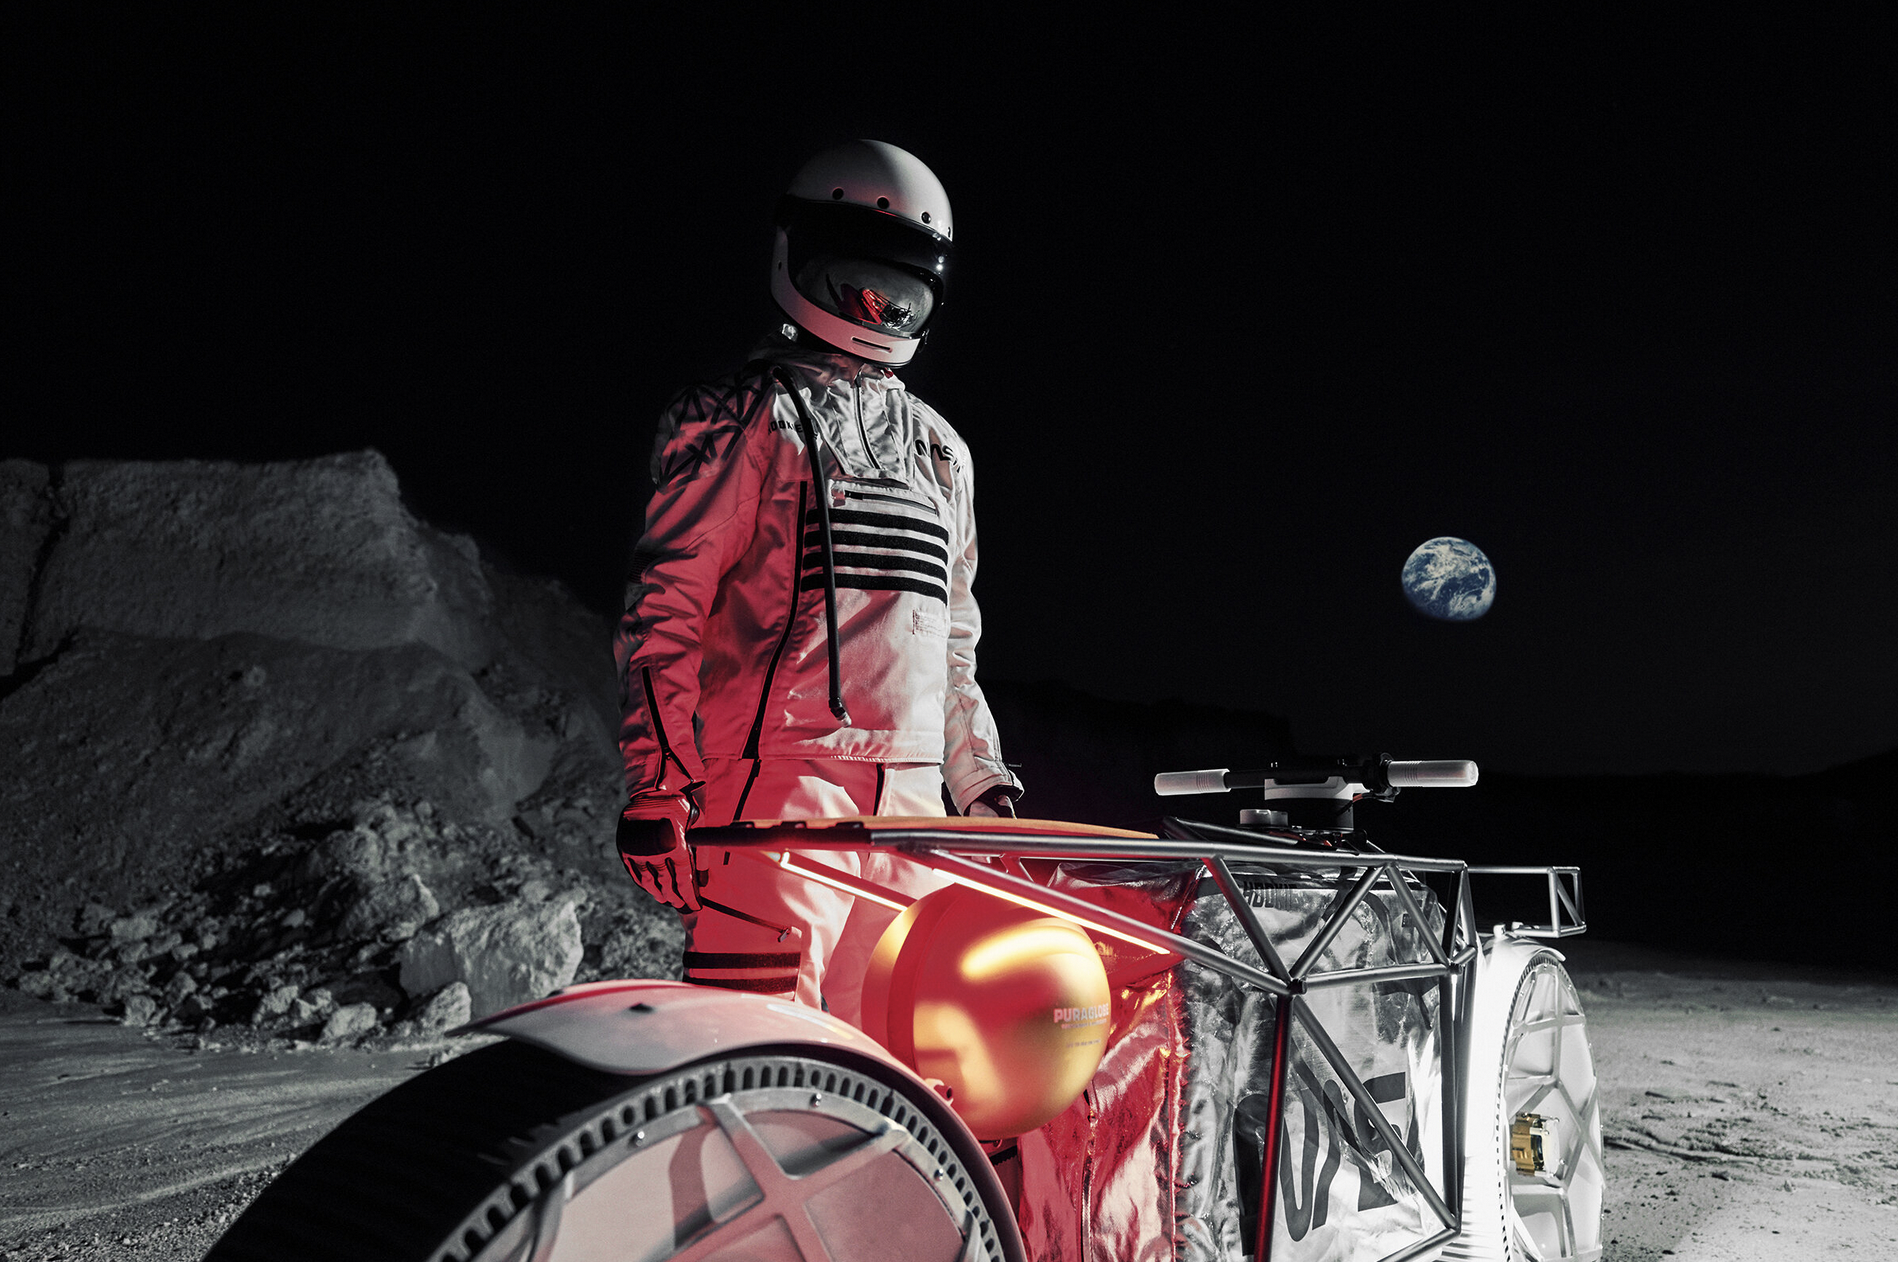 Tardigradeが開発した、NASAバイクの外見と宇宙飛行士のイメージ画像。来感が漂う雰囲気。